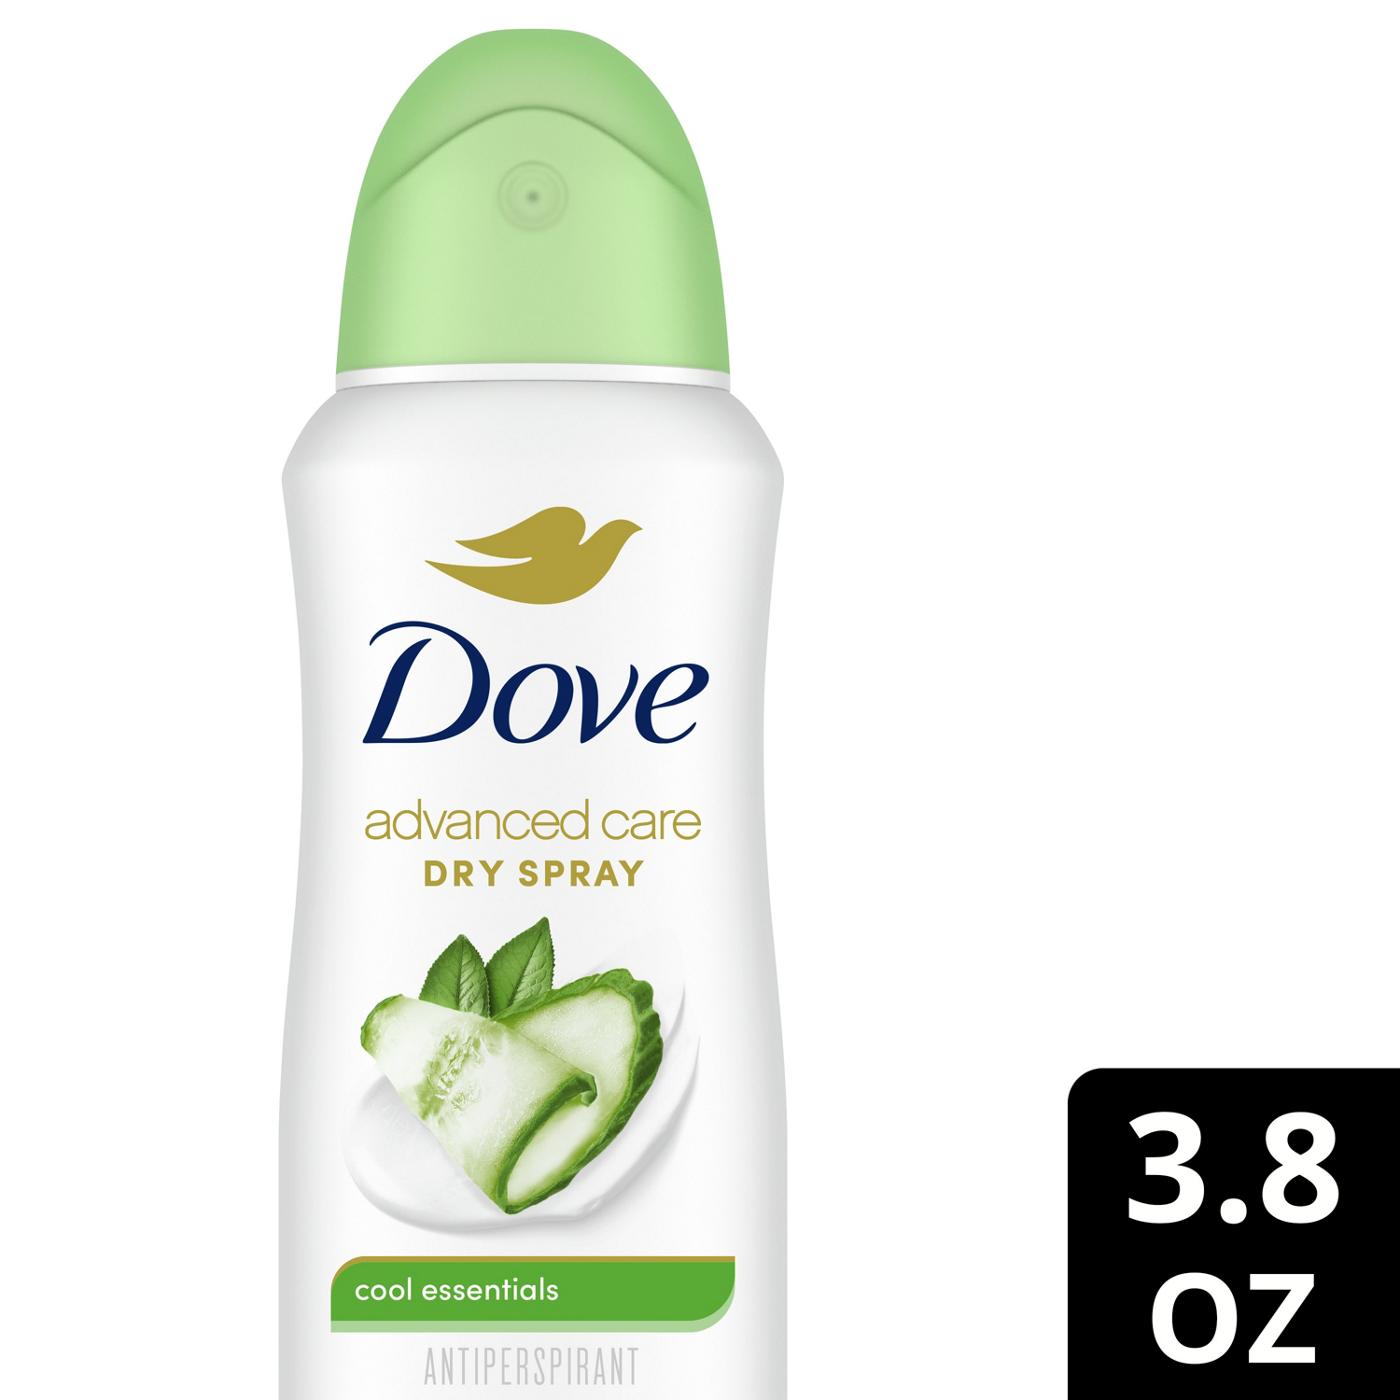 Dove Advanced Care Dry Spray Antiperspirant Deodorant - Cool Essentials; image 8 of 9